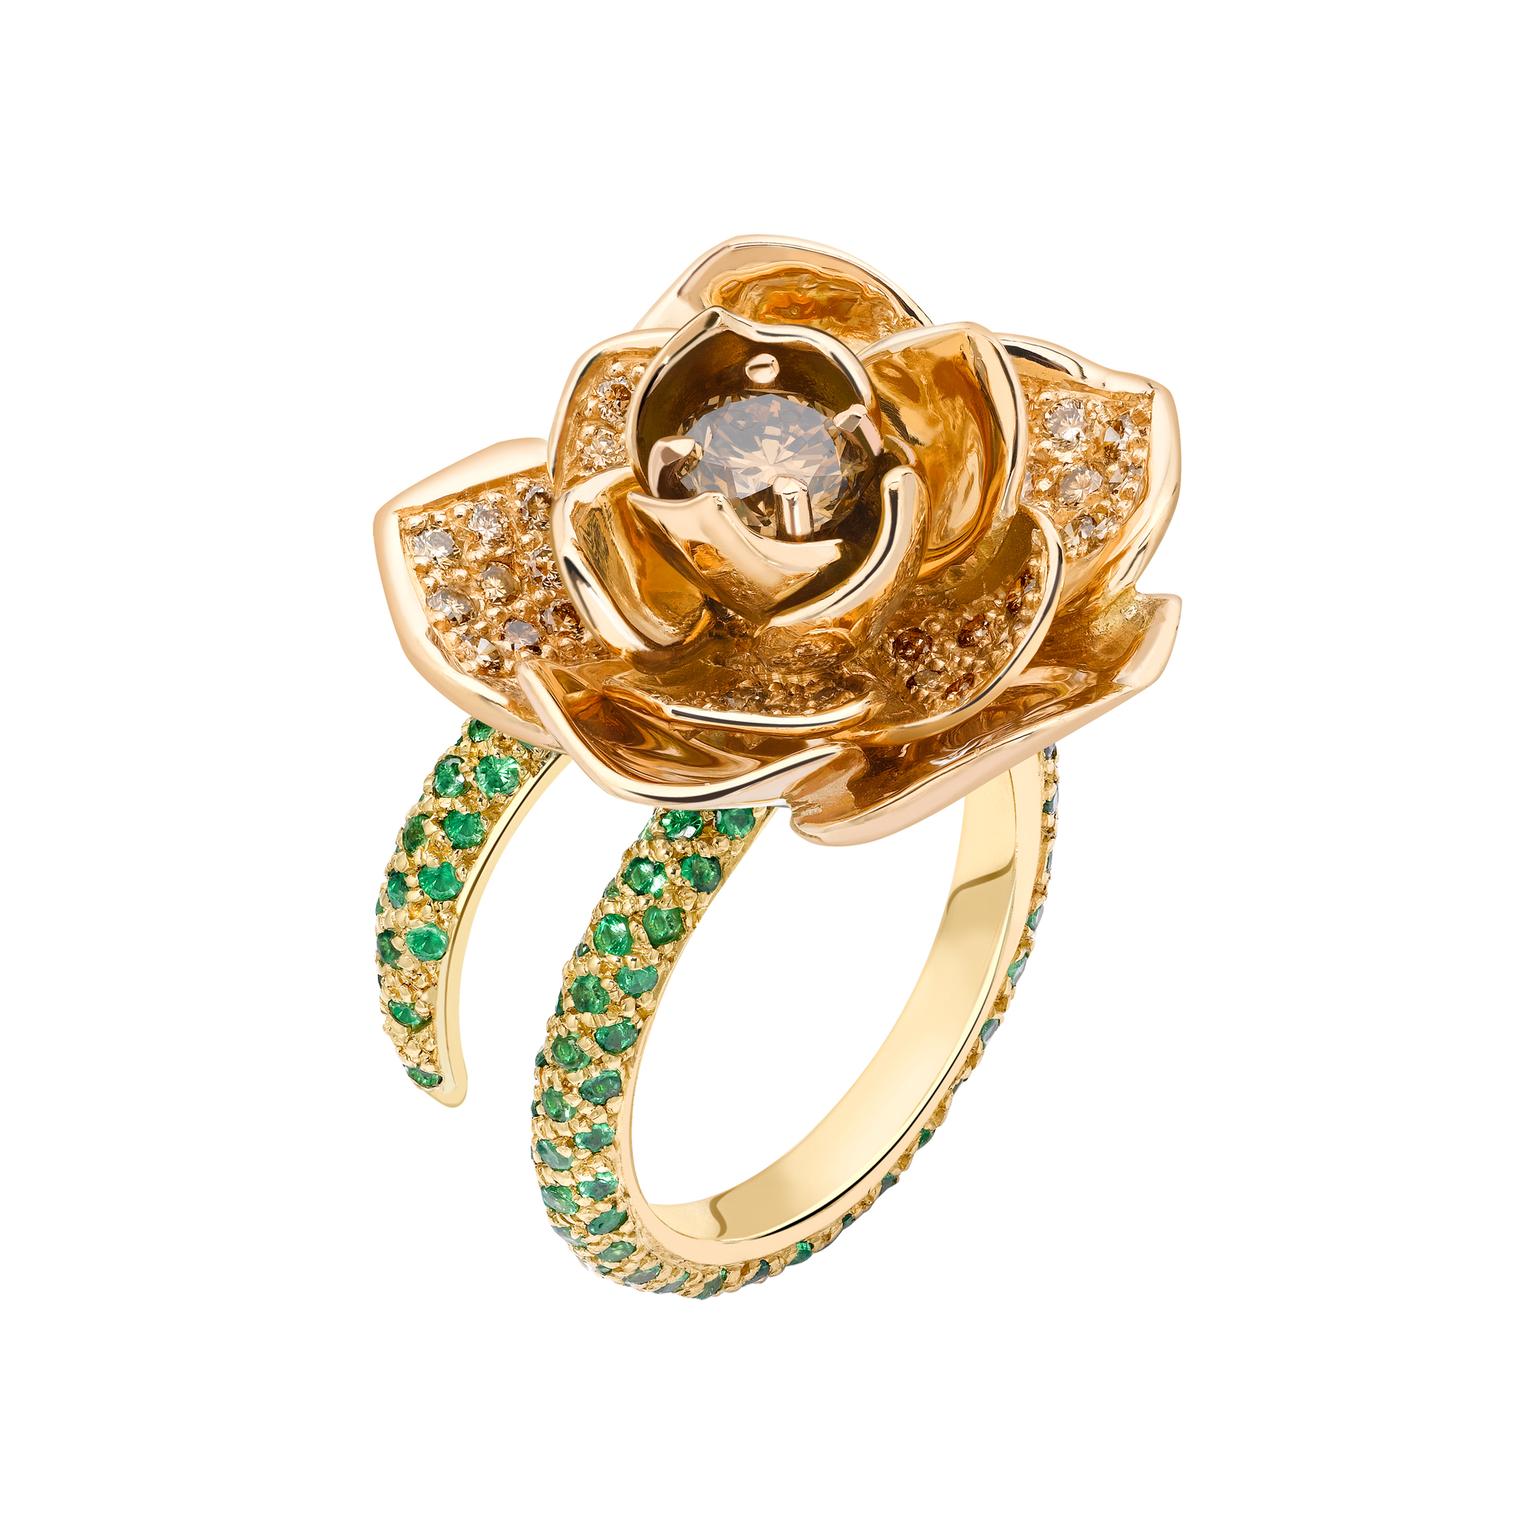 Ana de Costa Lotus Bud diamond and tsavorite ring